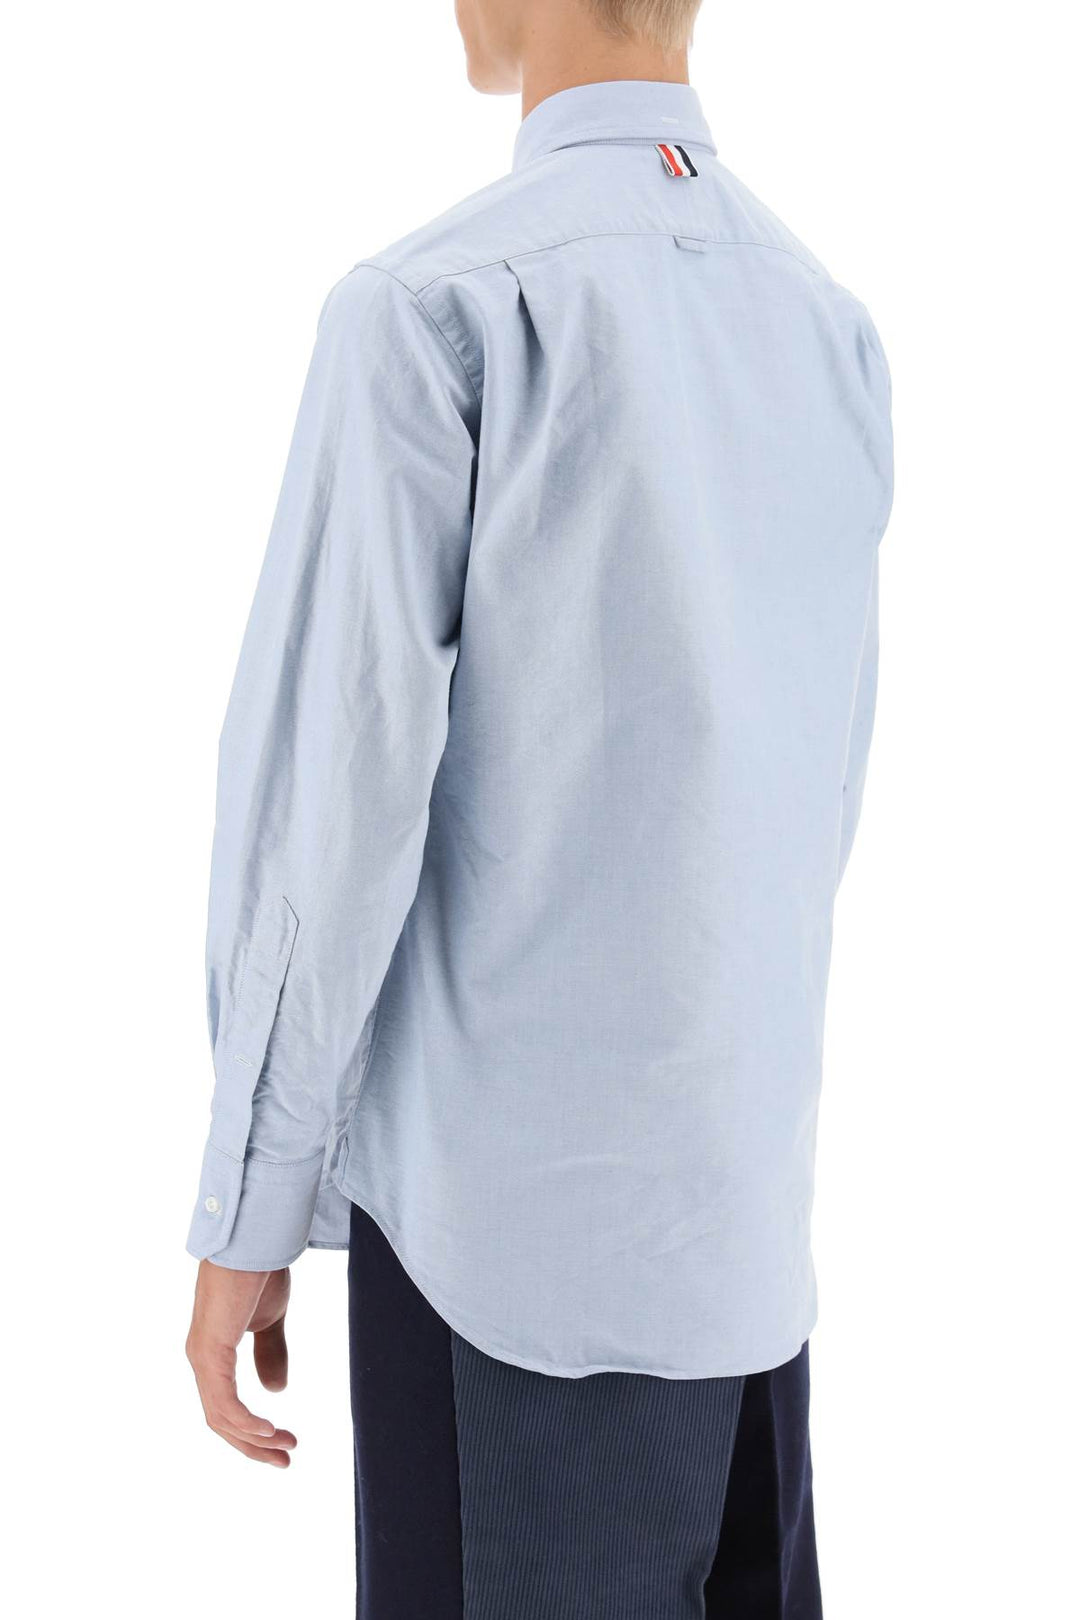 Thom browne oxford cotton button-down shirt-2